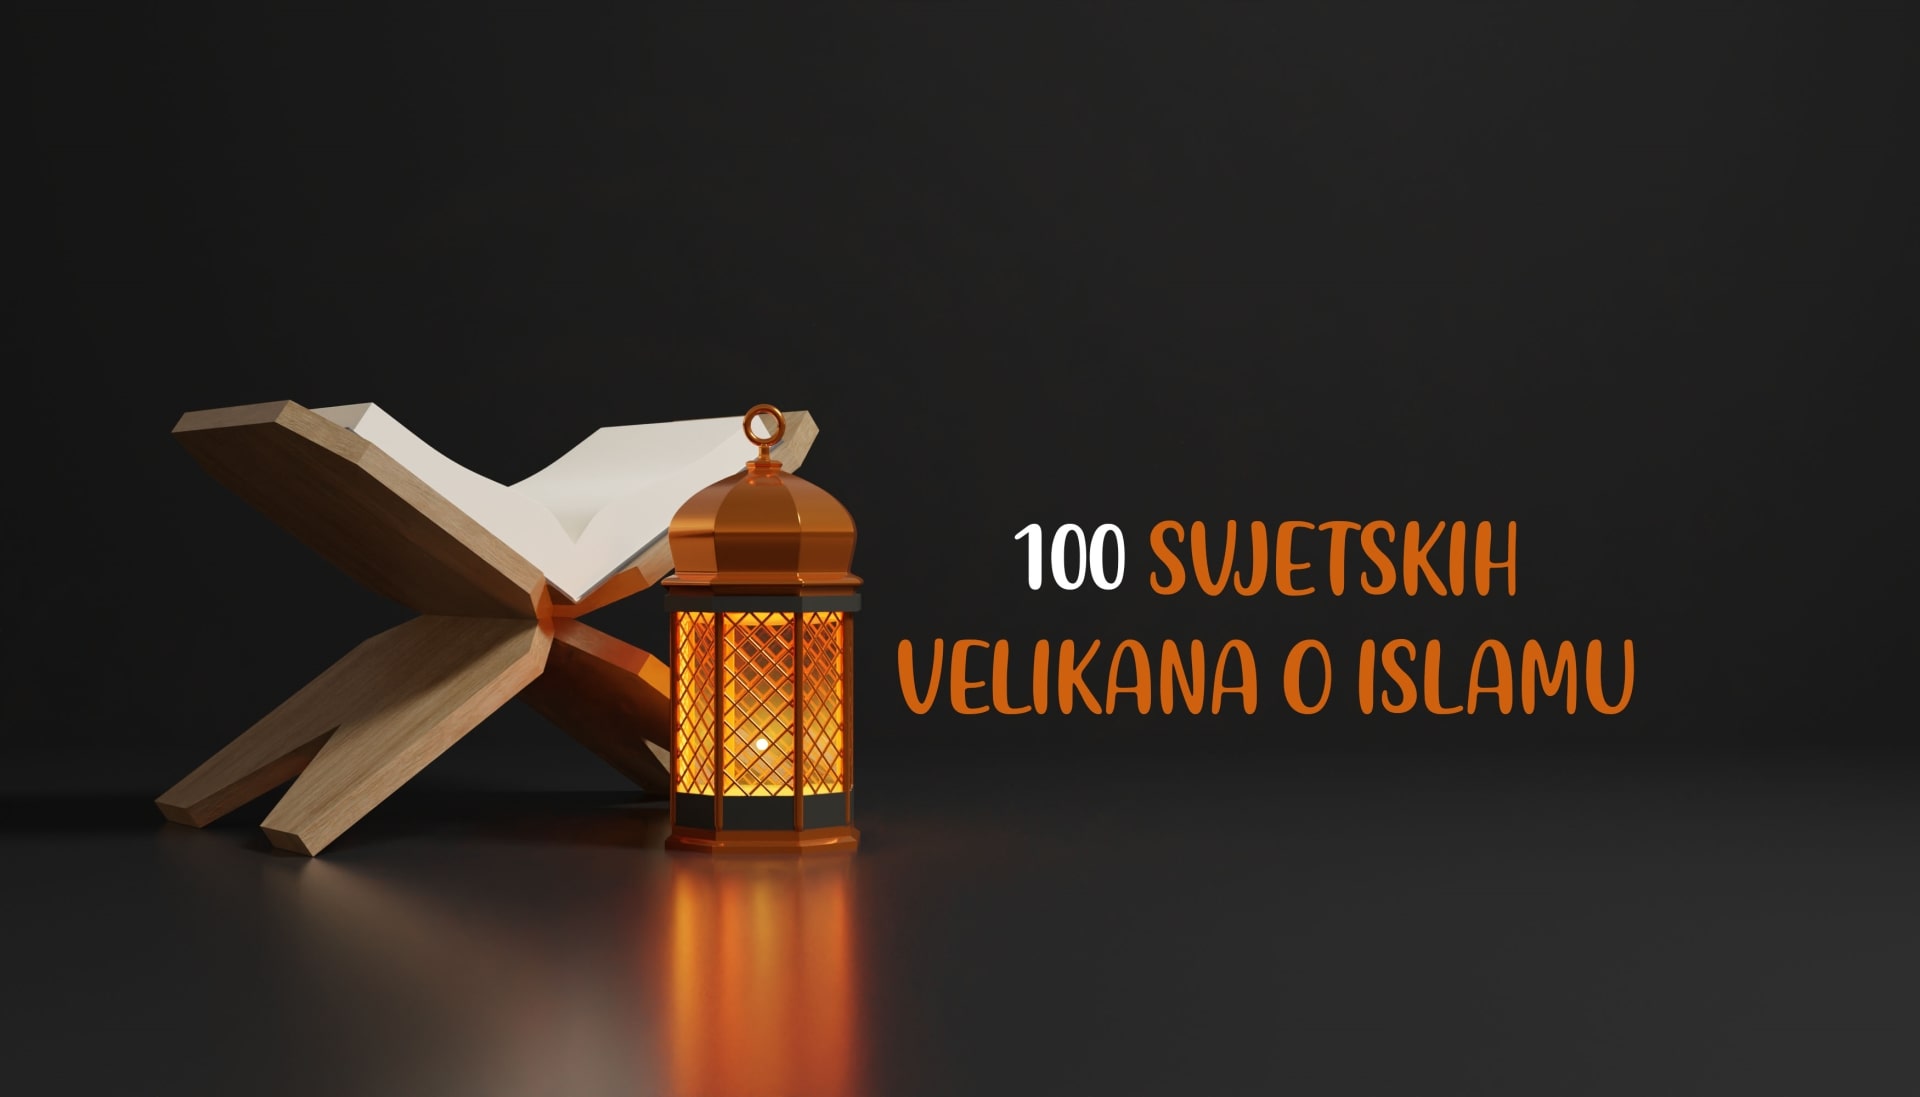 100 svjetskih velikana o islamu – Džordž Sarton Poučne priče El-Kelimeh Islamska literatura Islamske knjige